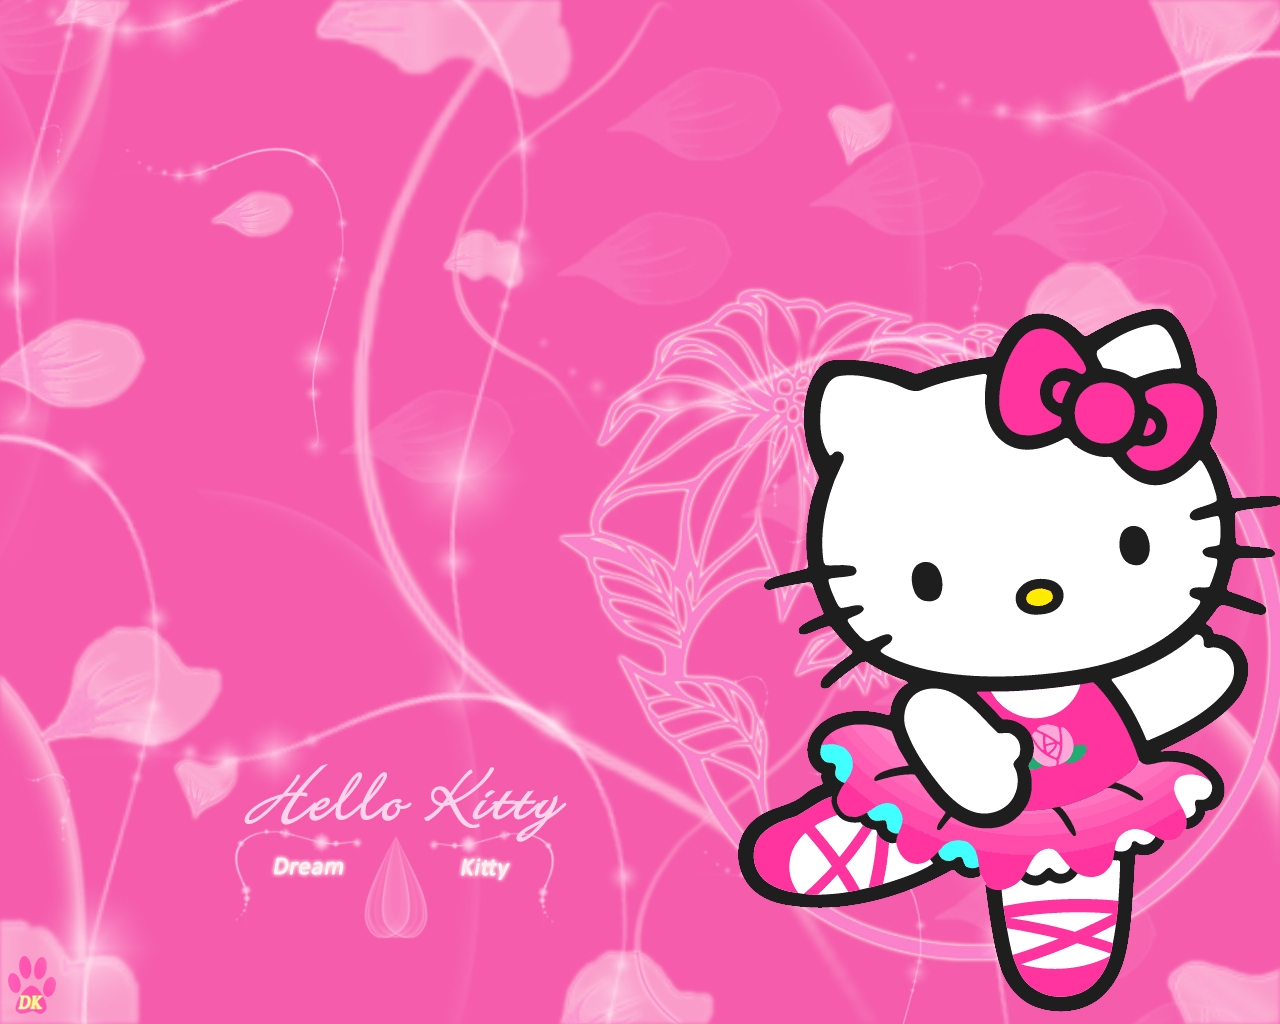 Hello Kitty Wallpaper Dream